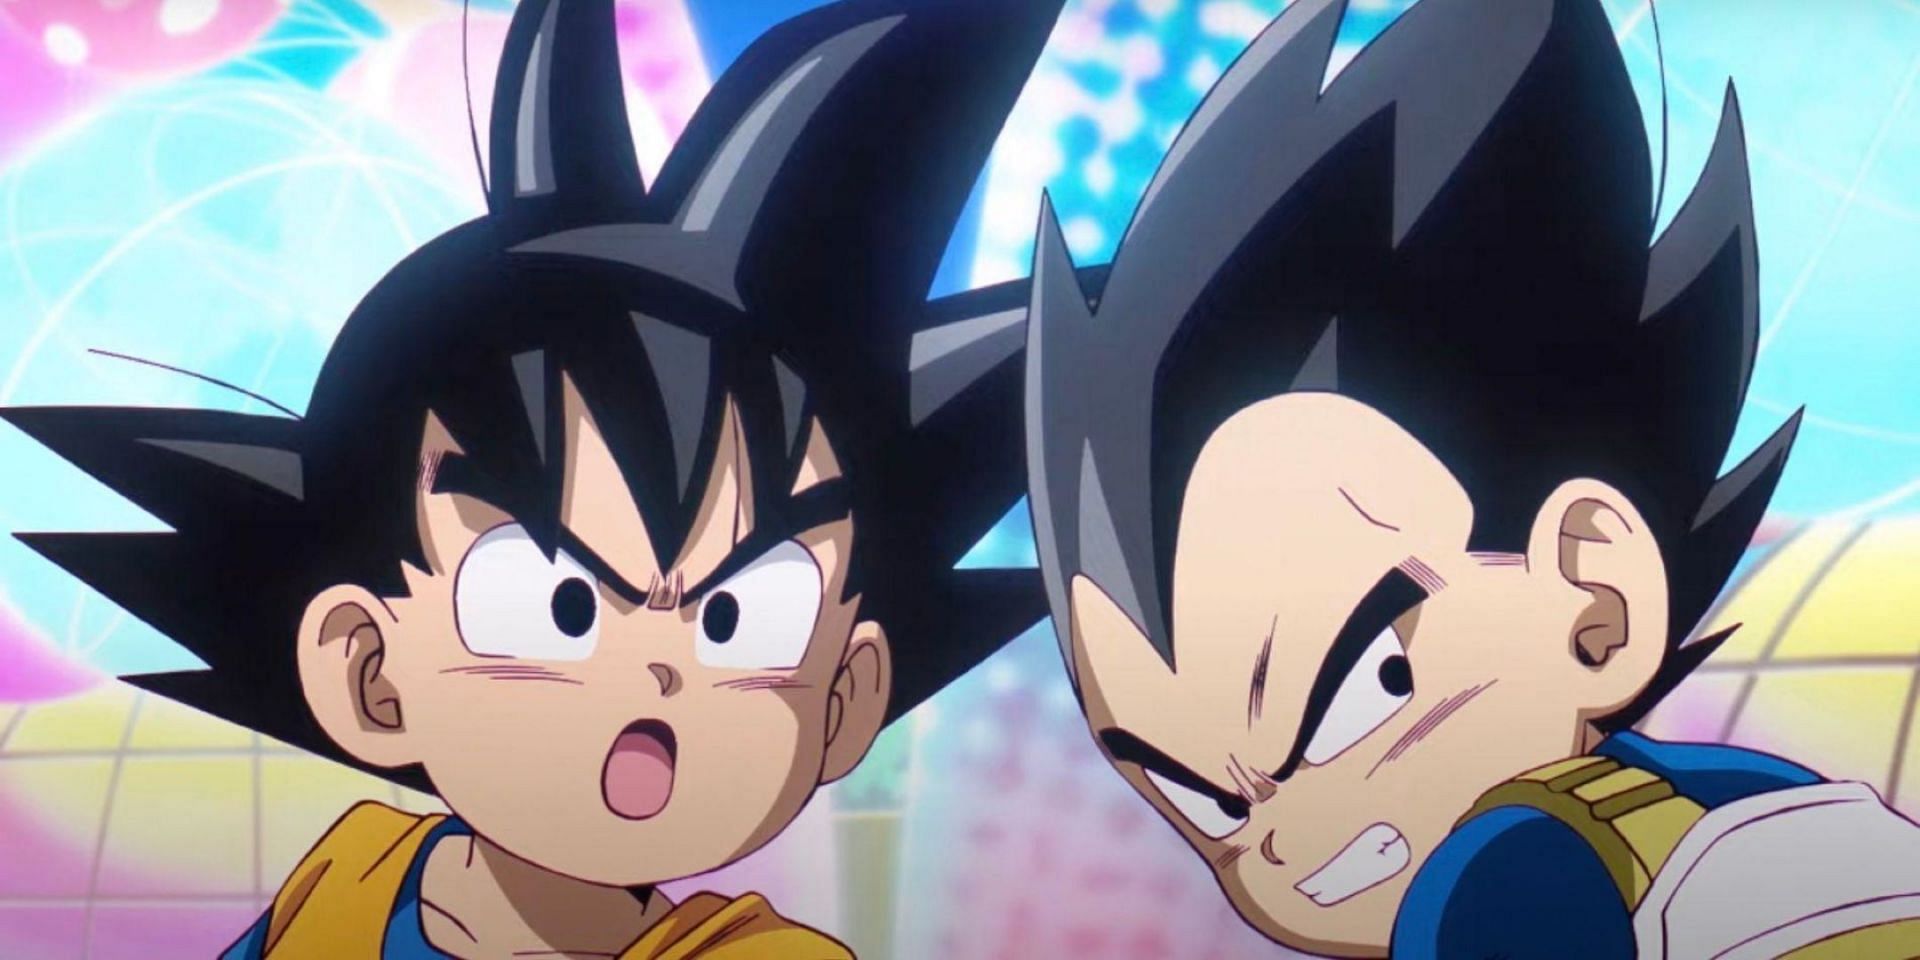 Goku and Vegeta as seen in the upcoming anime series (Image via Toei Animation)